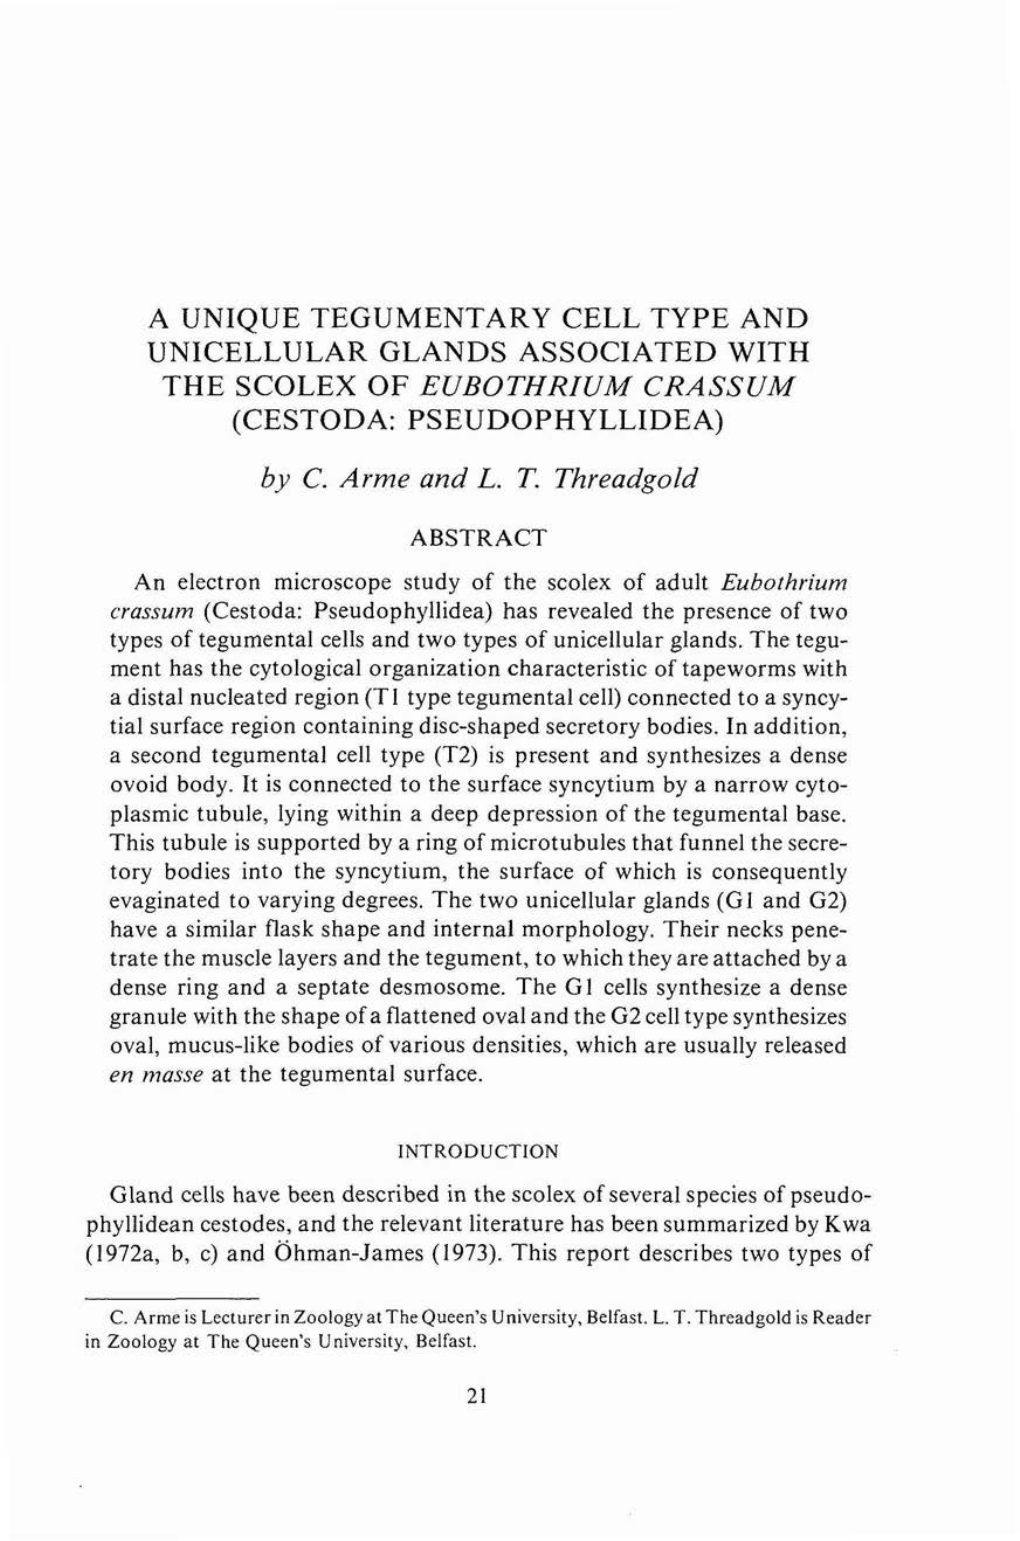 A UNIQUE TEGUMENTARY CELL TYPE and UNICELLULAR GLANDS ASSOCIATED with the SCOLEX of EUBOTHRIUM CRASSUM (CESTODA: PSEUDOPHYLLIDEA) by C